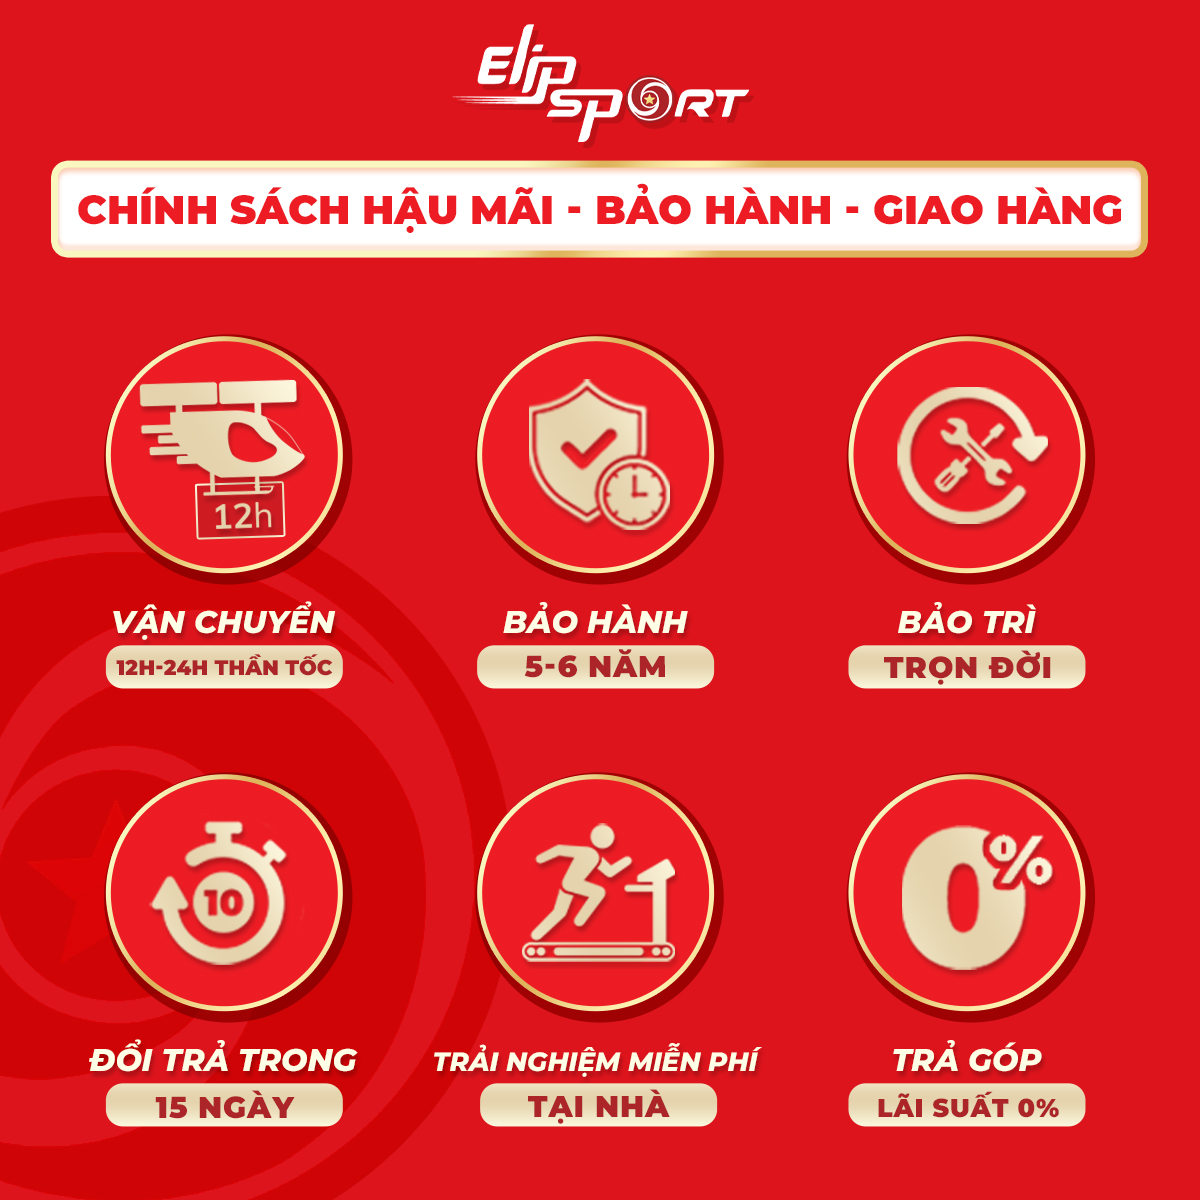 bao-hanh-bao-tri-ghe-massage-elipsport